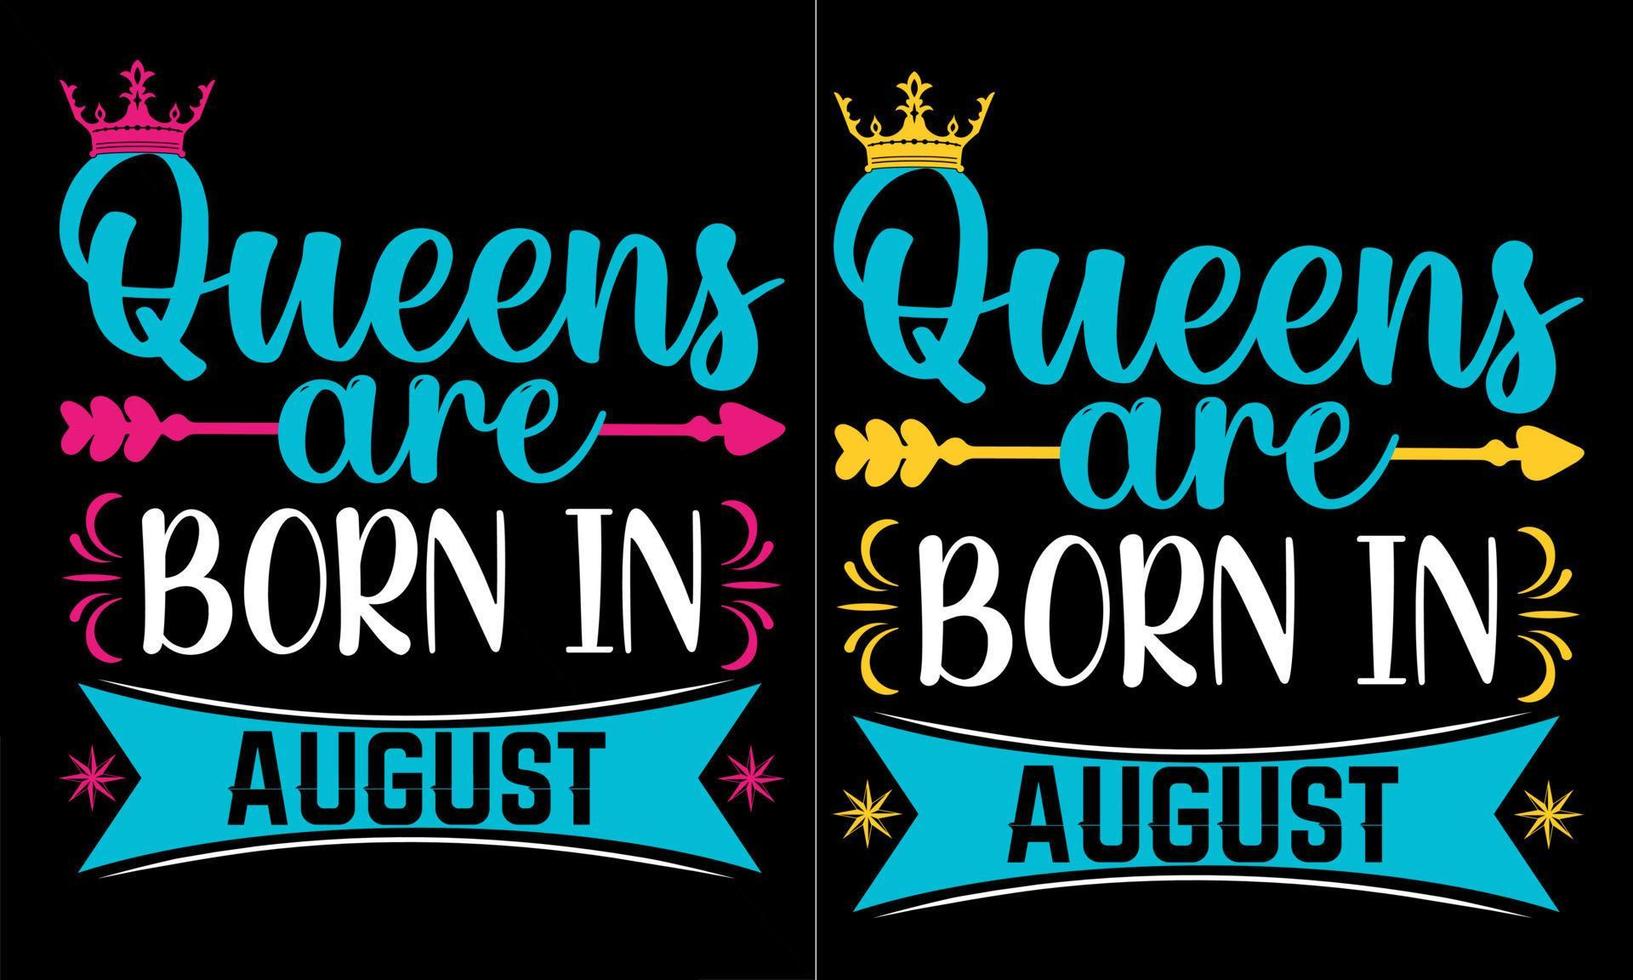 Popular phrase queens are born in t shirt designs vector